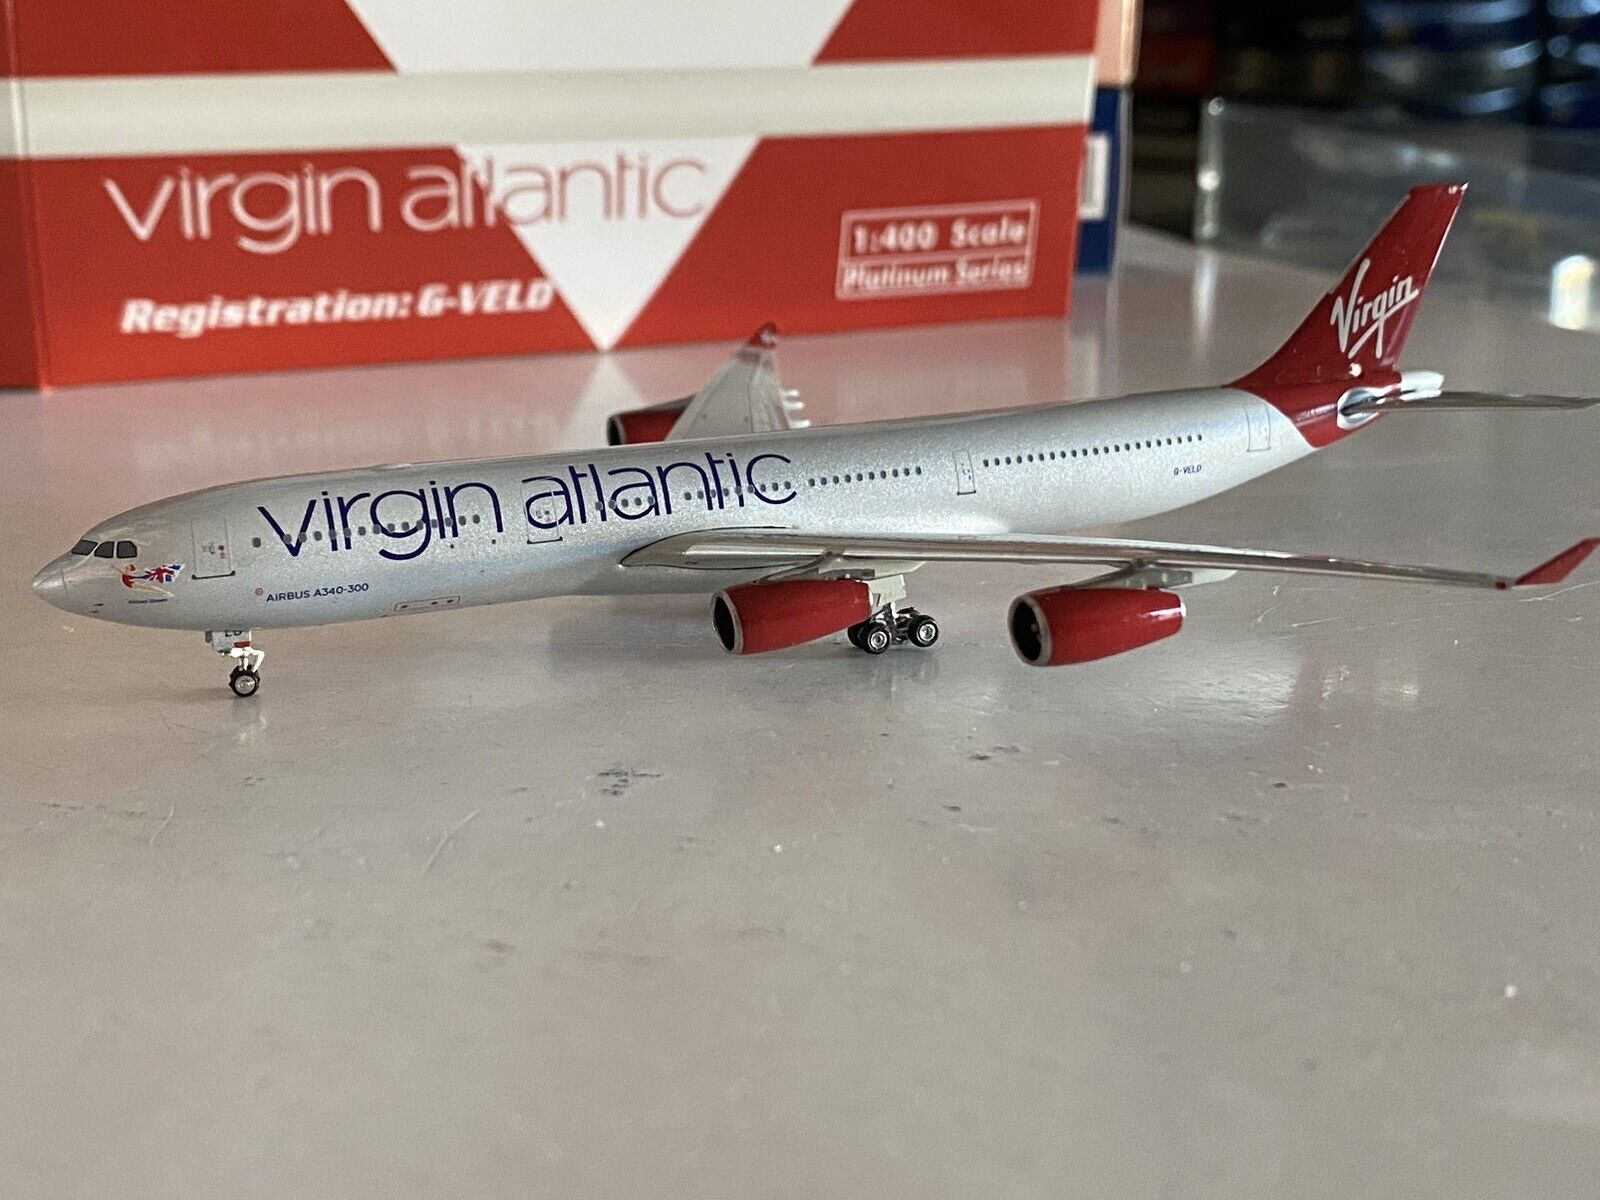 Phoenix Models Virgin Atlantic Airways Airbus A340-300 1:400 G-VELD PH410556